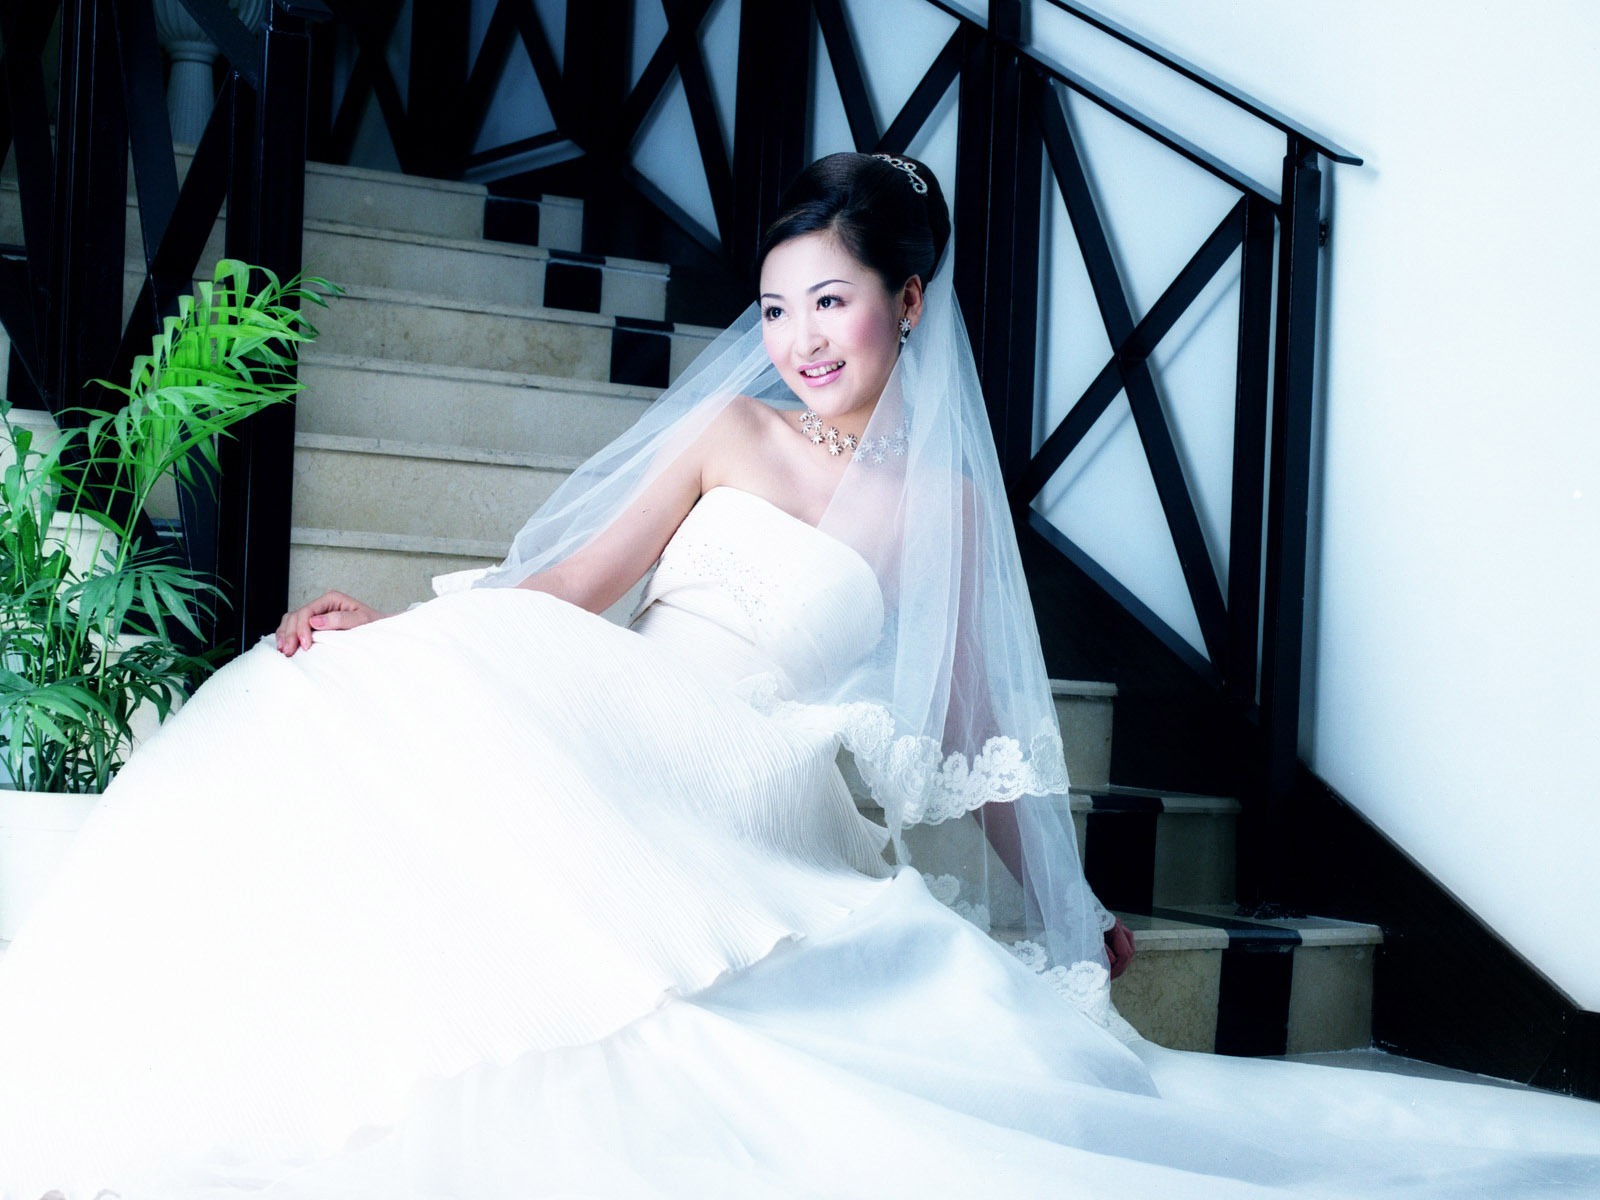 Beautiful Wedding Bride #16 - 1600x1200